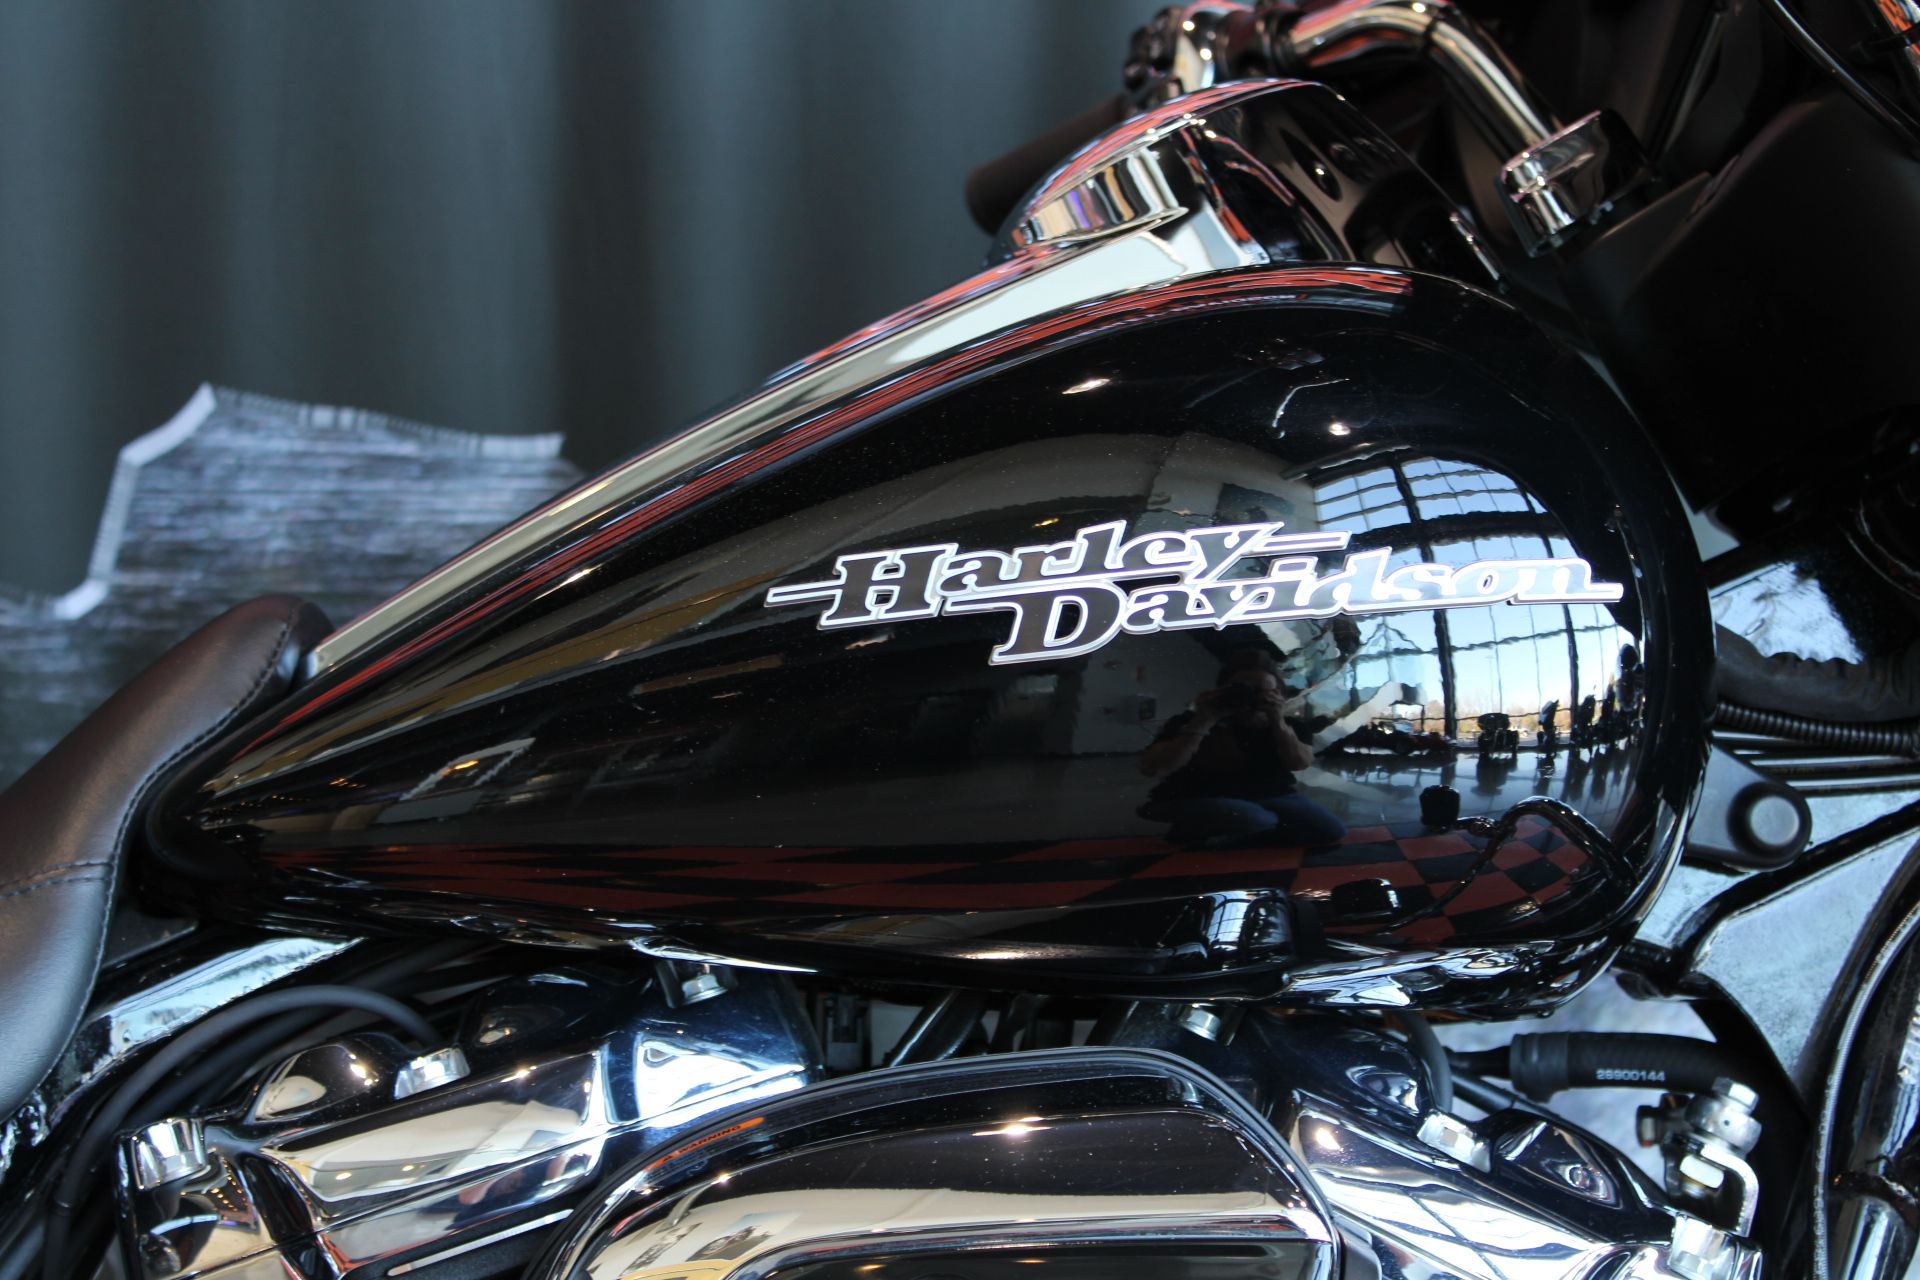 2020 Harley-Davidson Street Glide® in Shorewood, Illinois - Photo 5